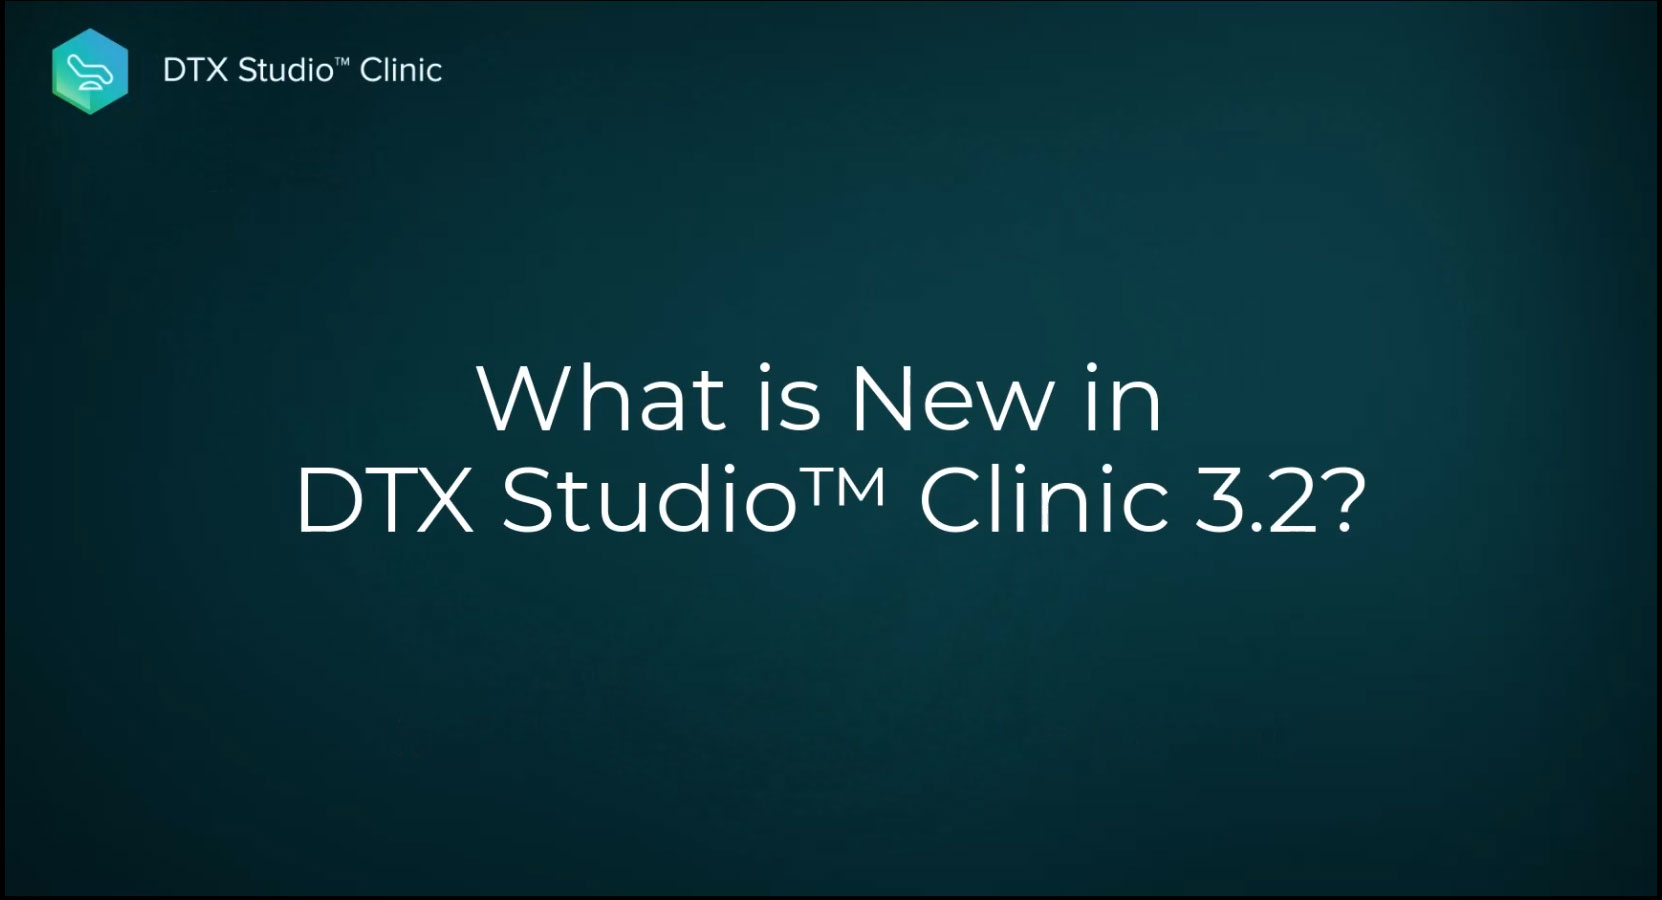 Highlights DTX Studio Clinic version 3.2